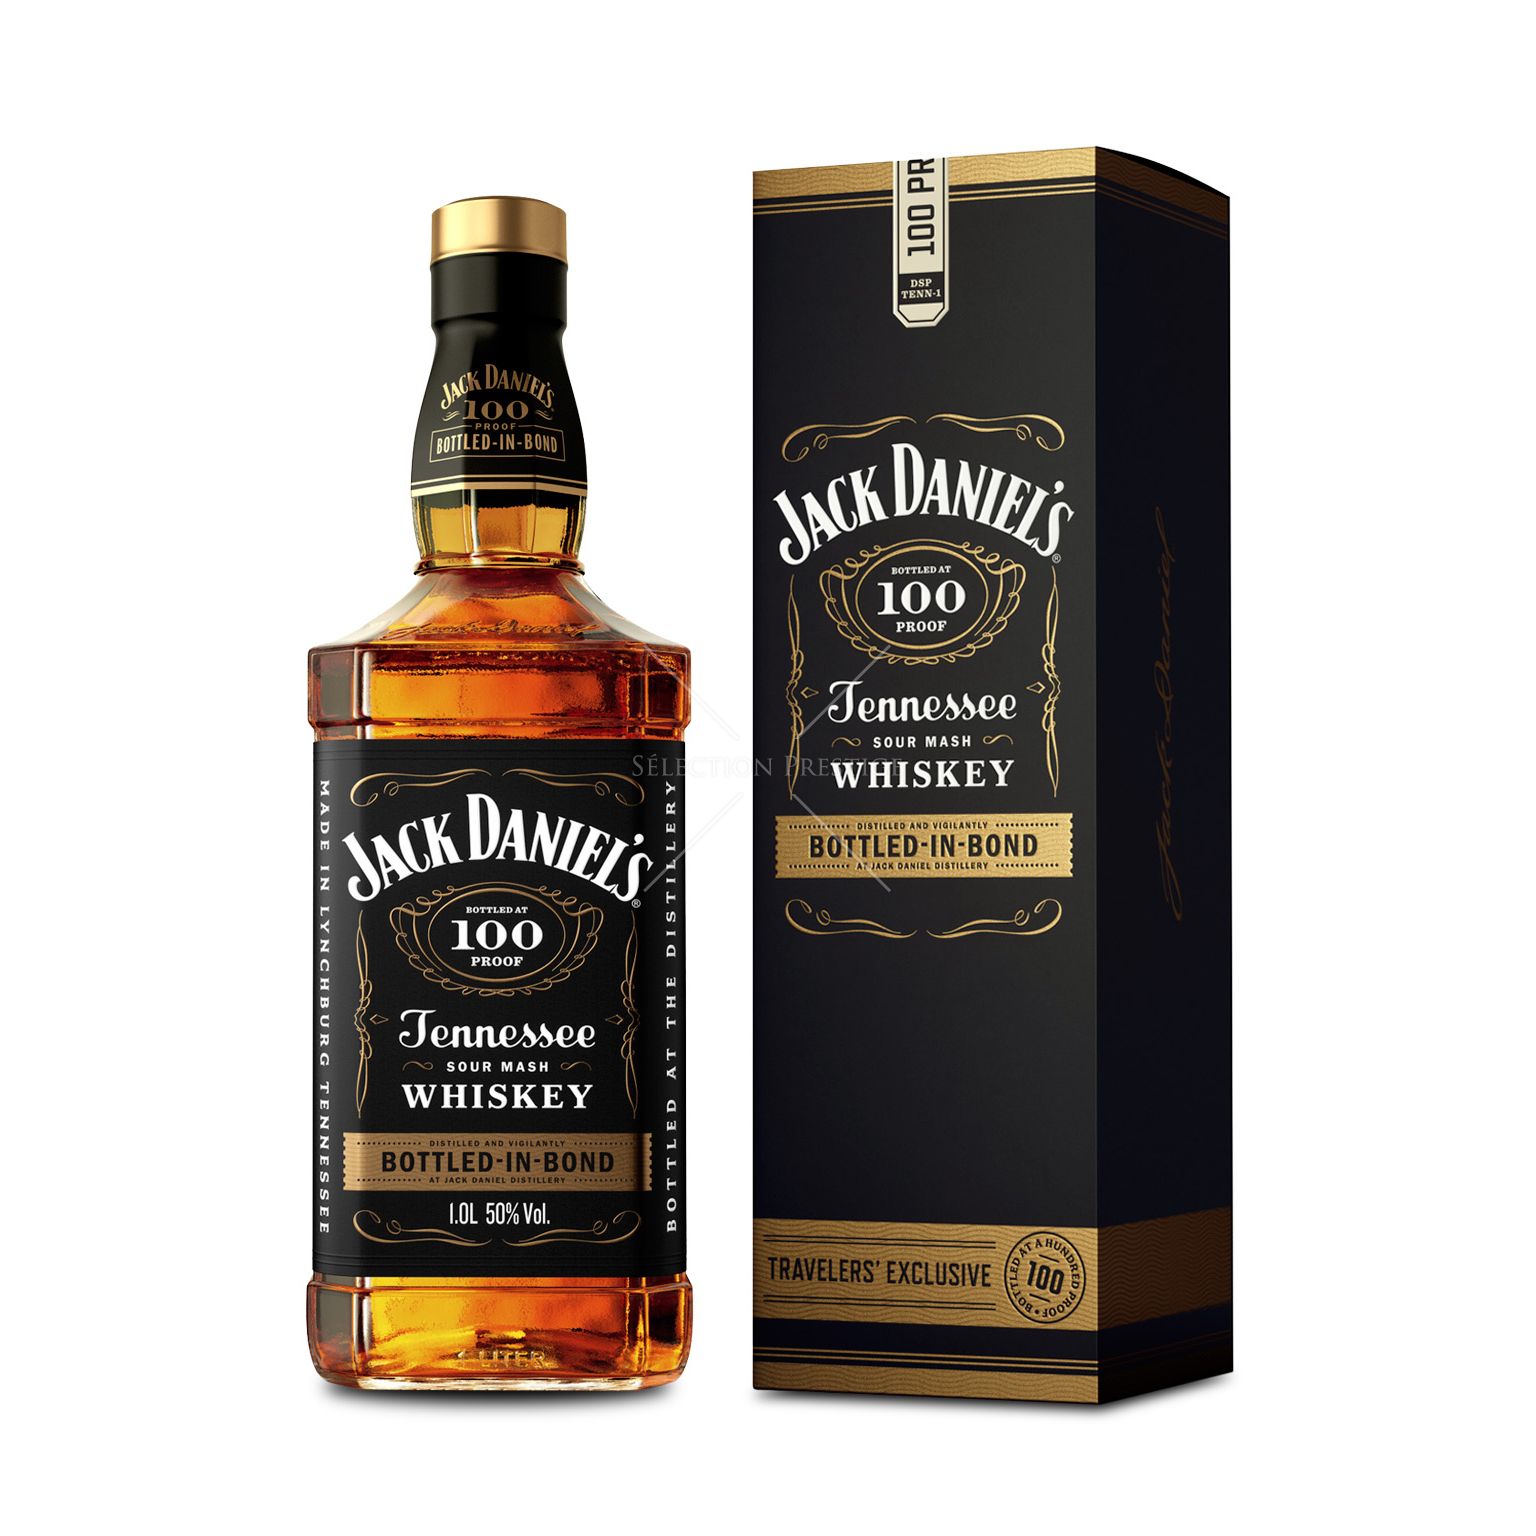 Jack Daniels Tennessee sour mash whisky bottled-in-bond